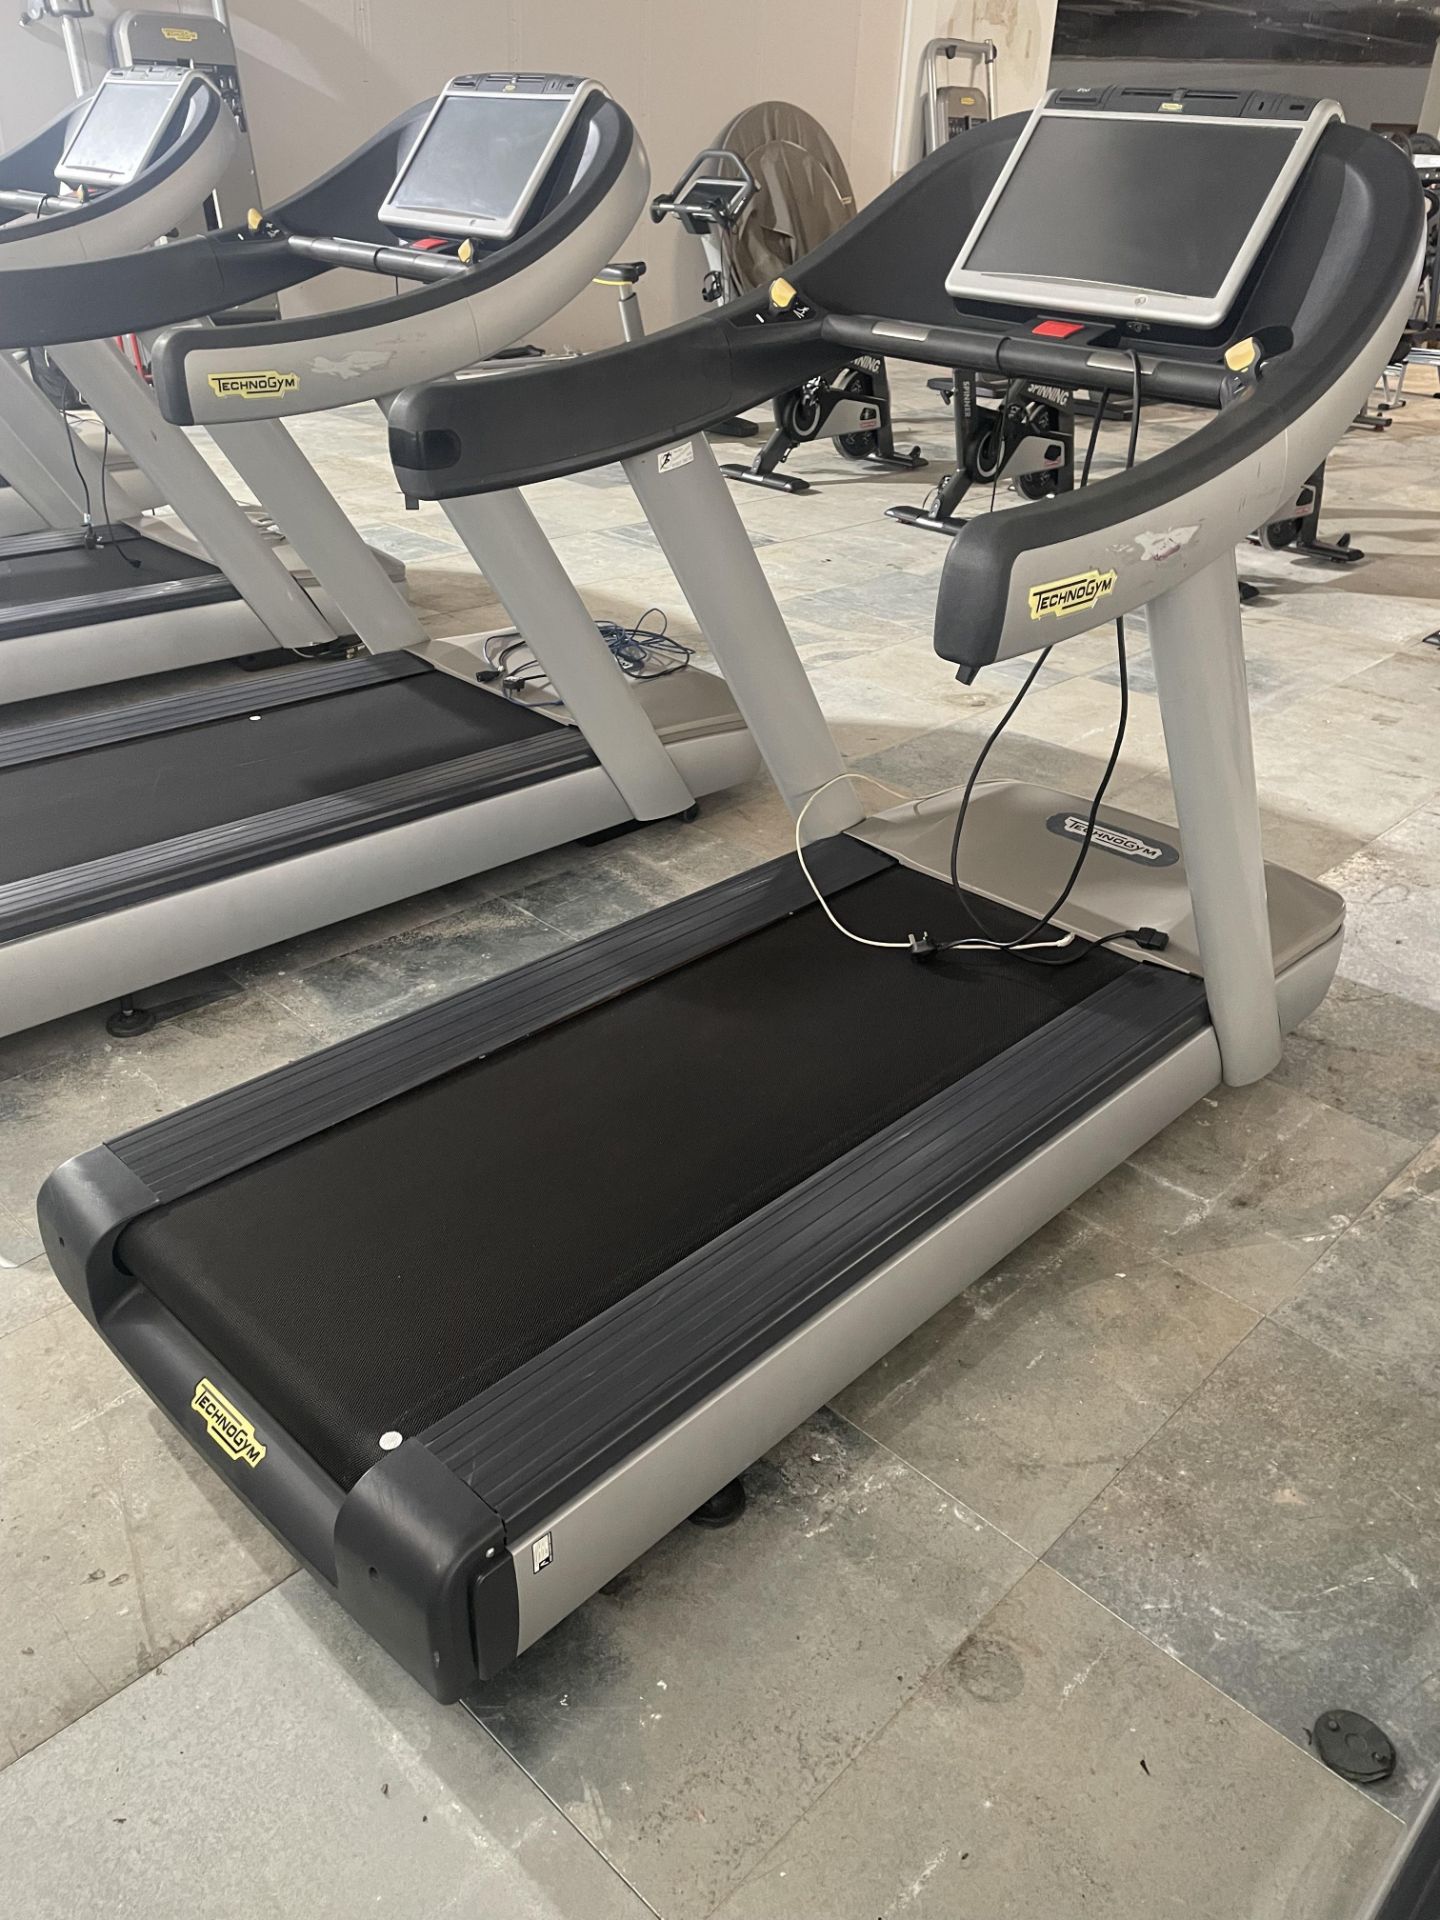 Technogym Treadmill - Image 4 of 7